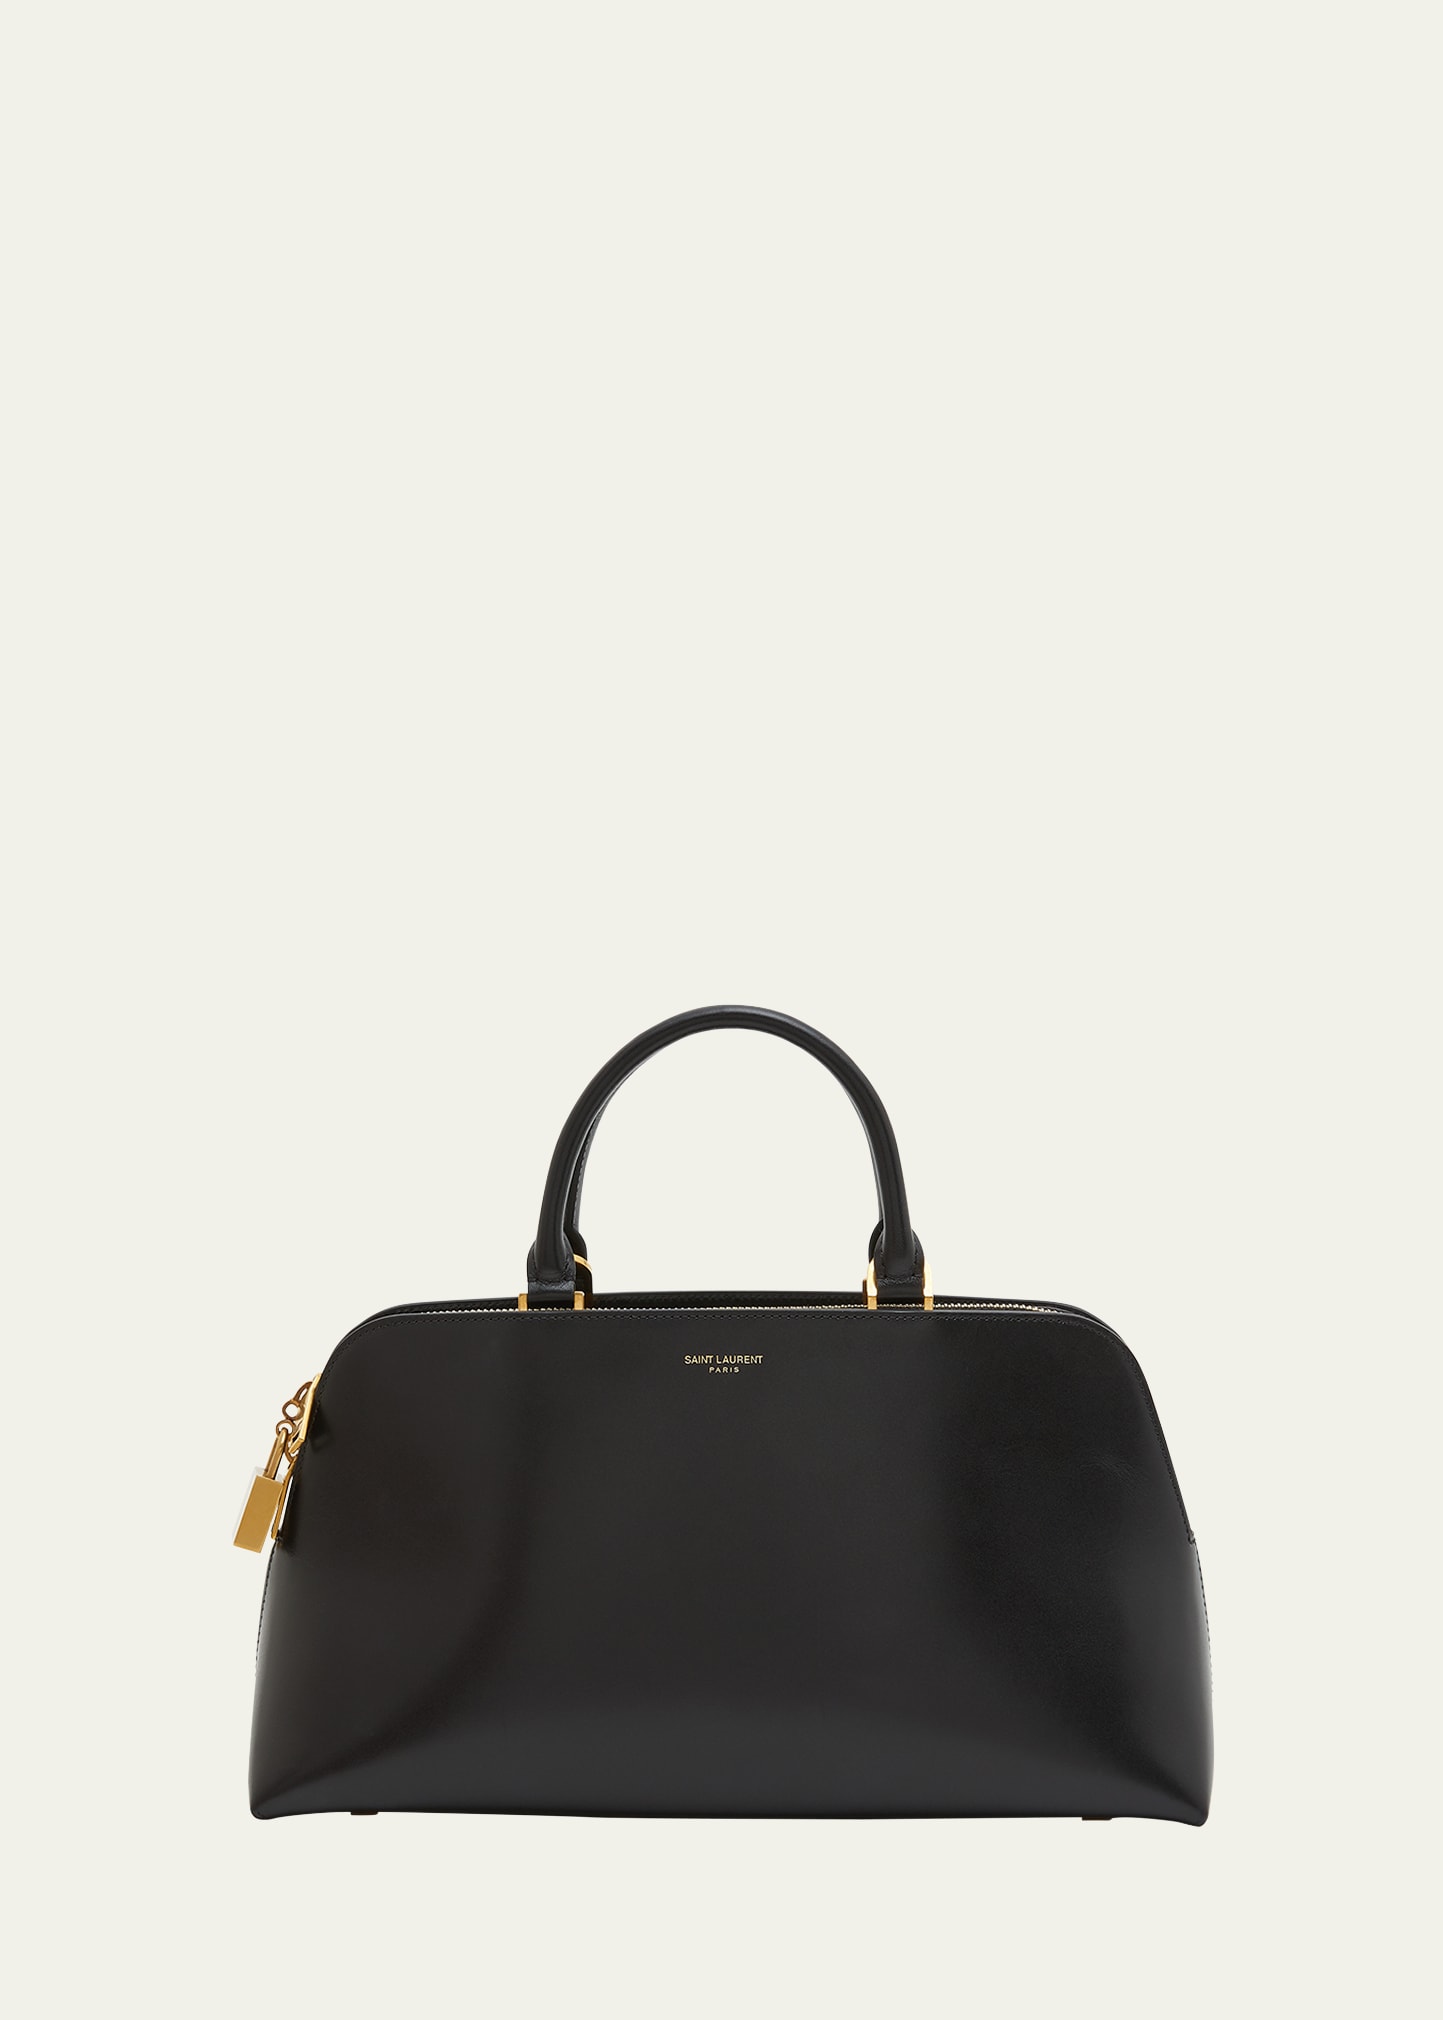 Saint Laurent Sac De Jour Small Top-handle Bag In Leather In Black